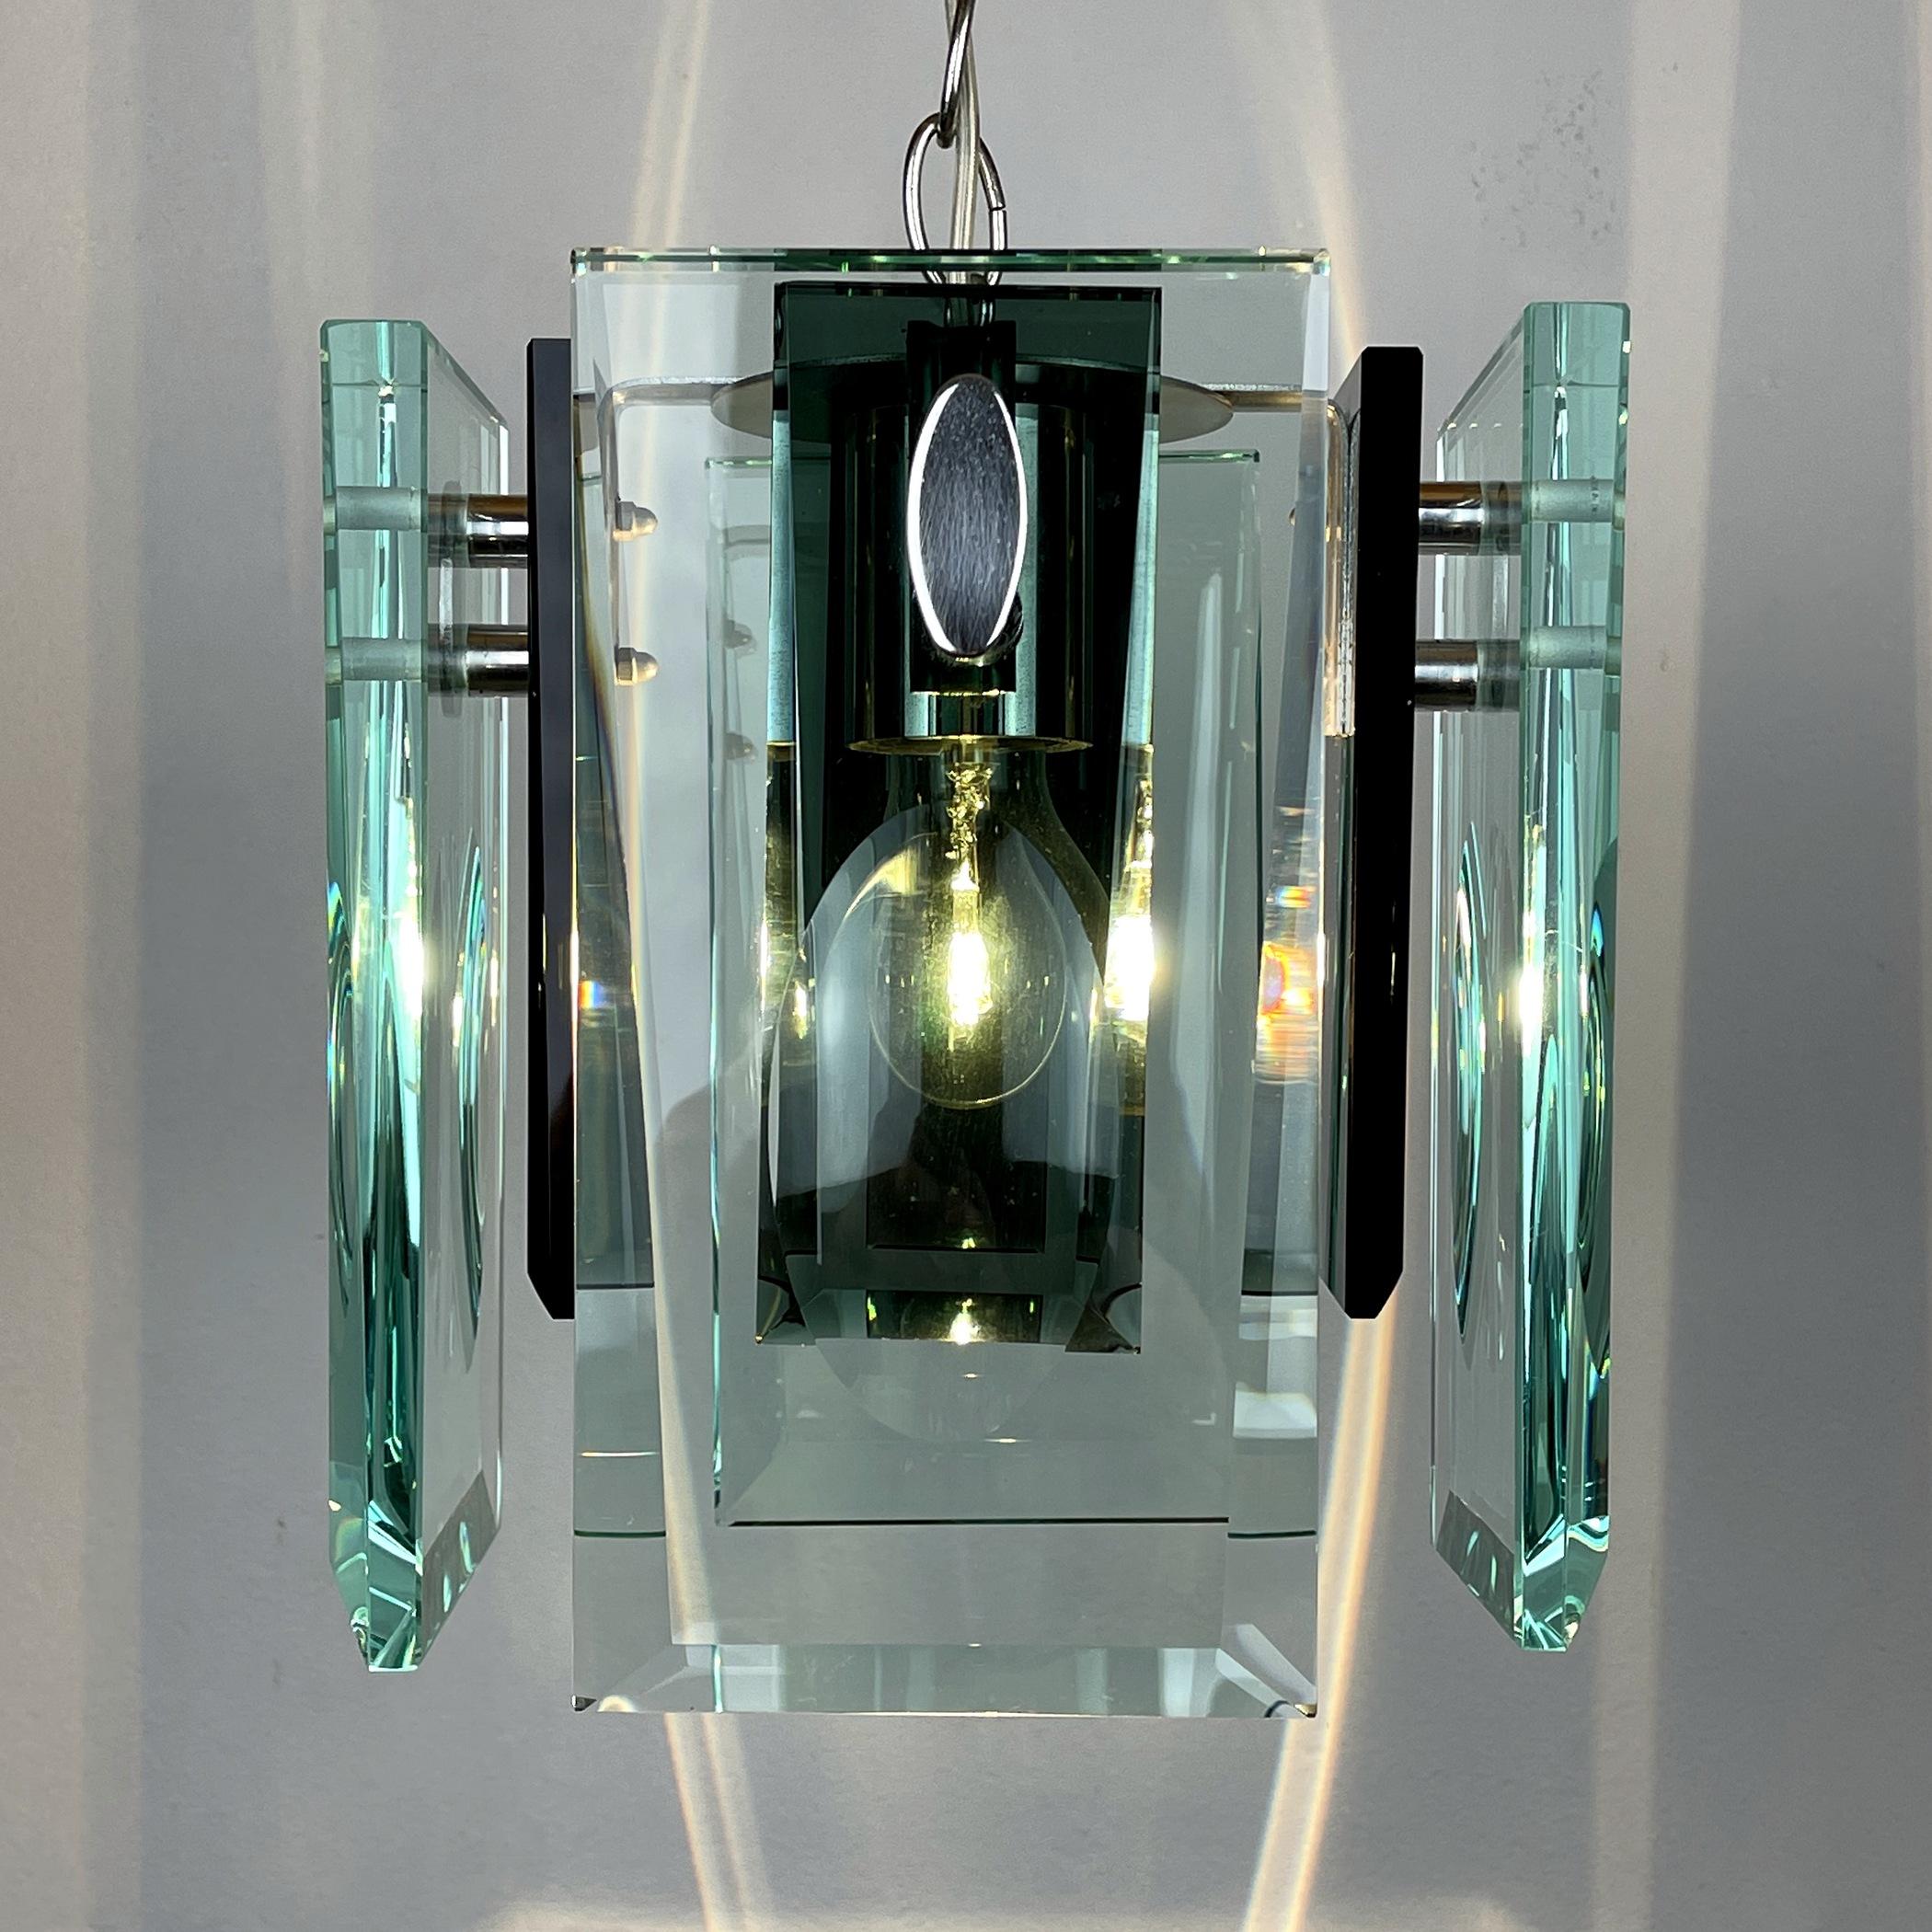 Rare Art Glass Pendant Lamp Italian Design by Fontana Arte Italy 70s For Sale 10